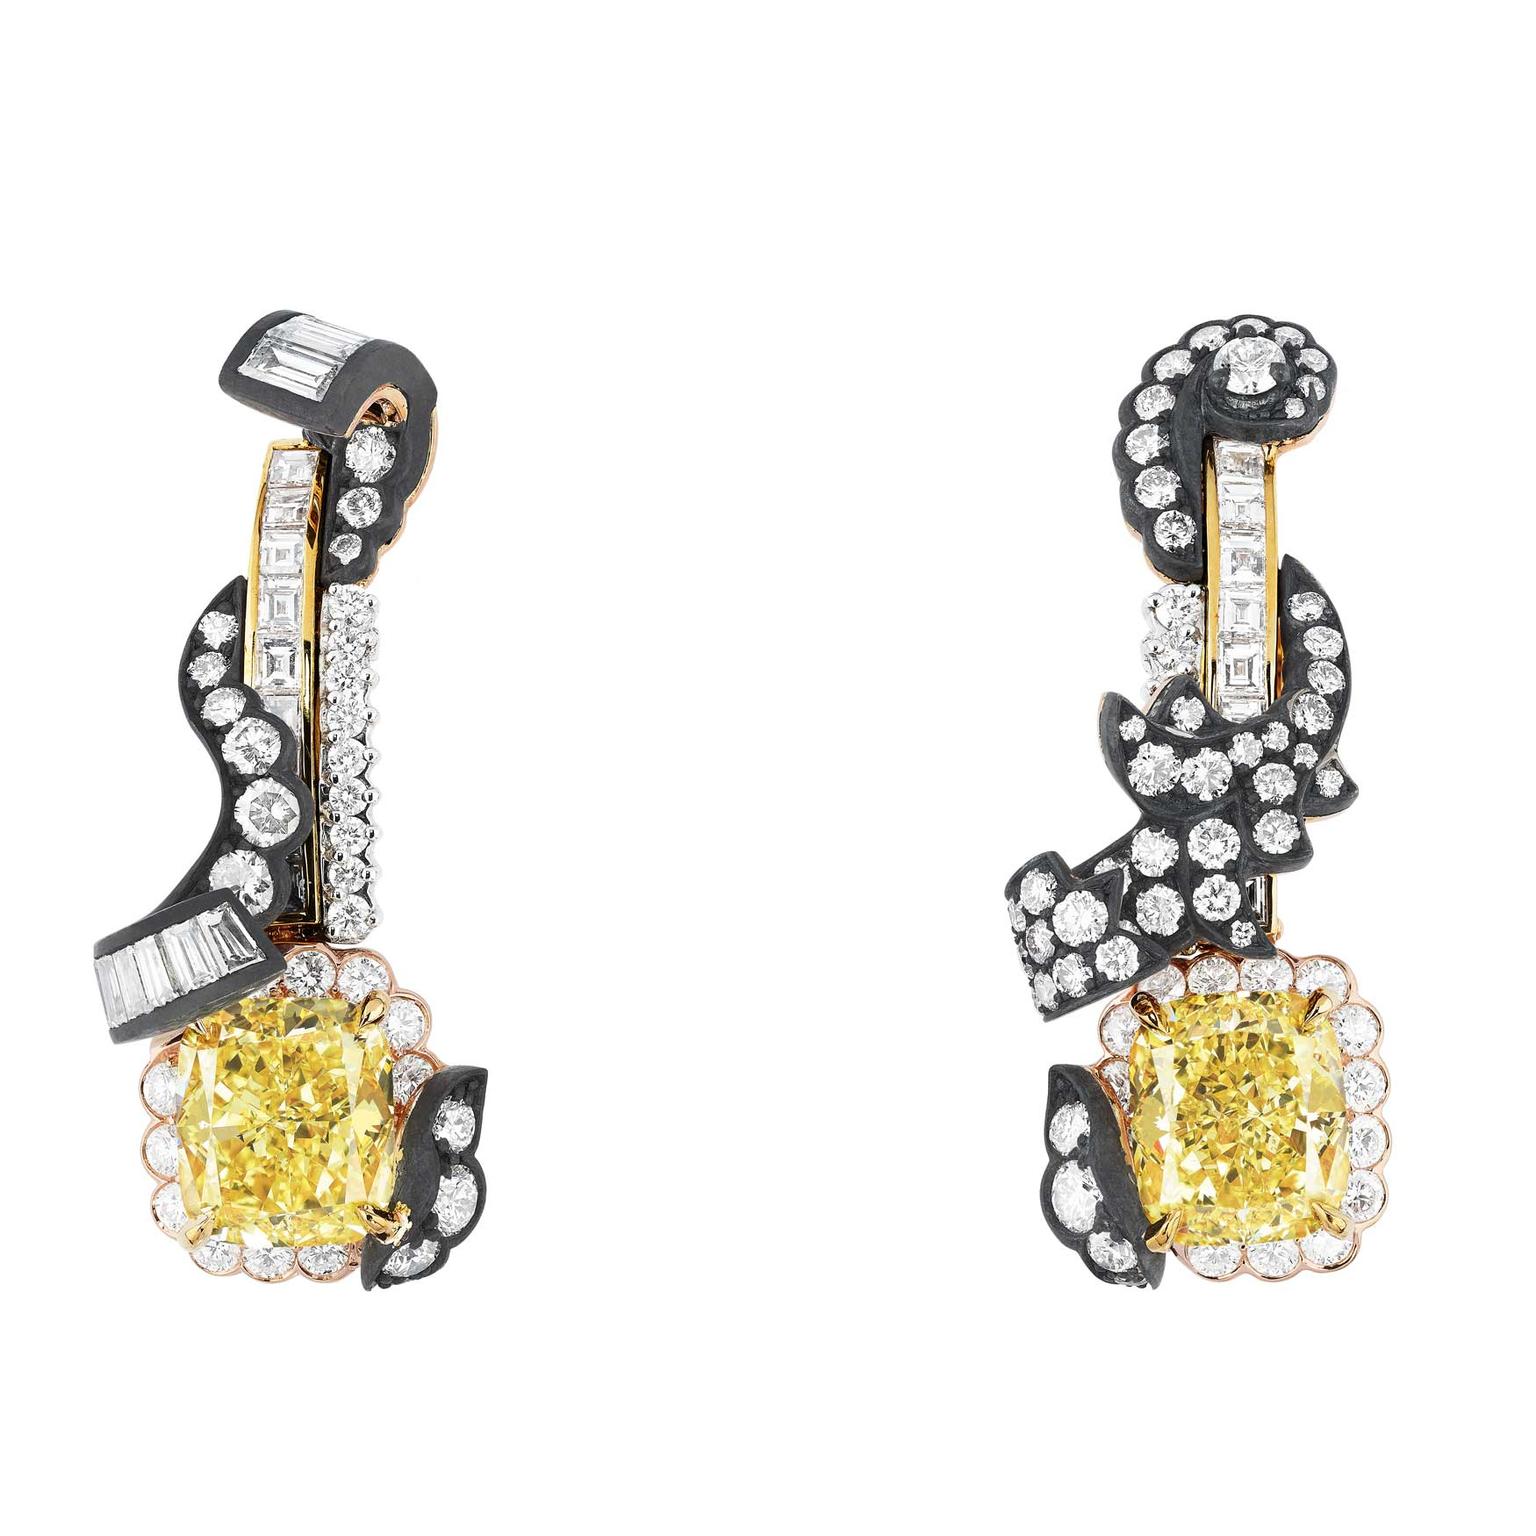 Dior à Versailles Boiserie Diamant Jaune white and yellow diamond earrings